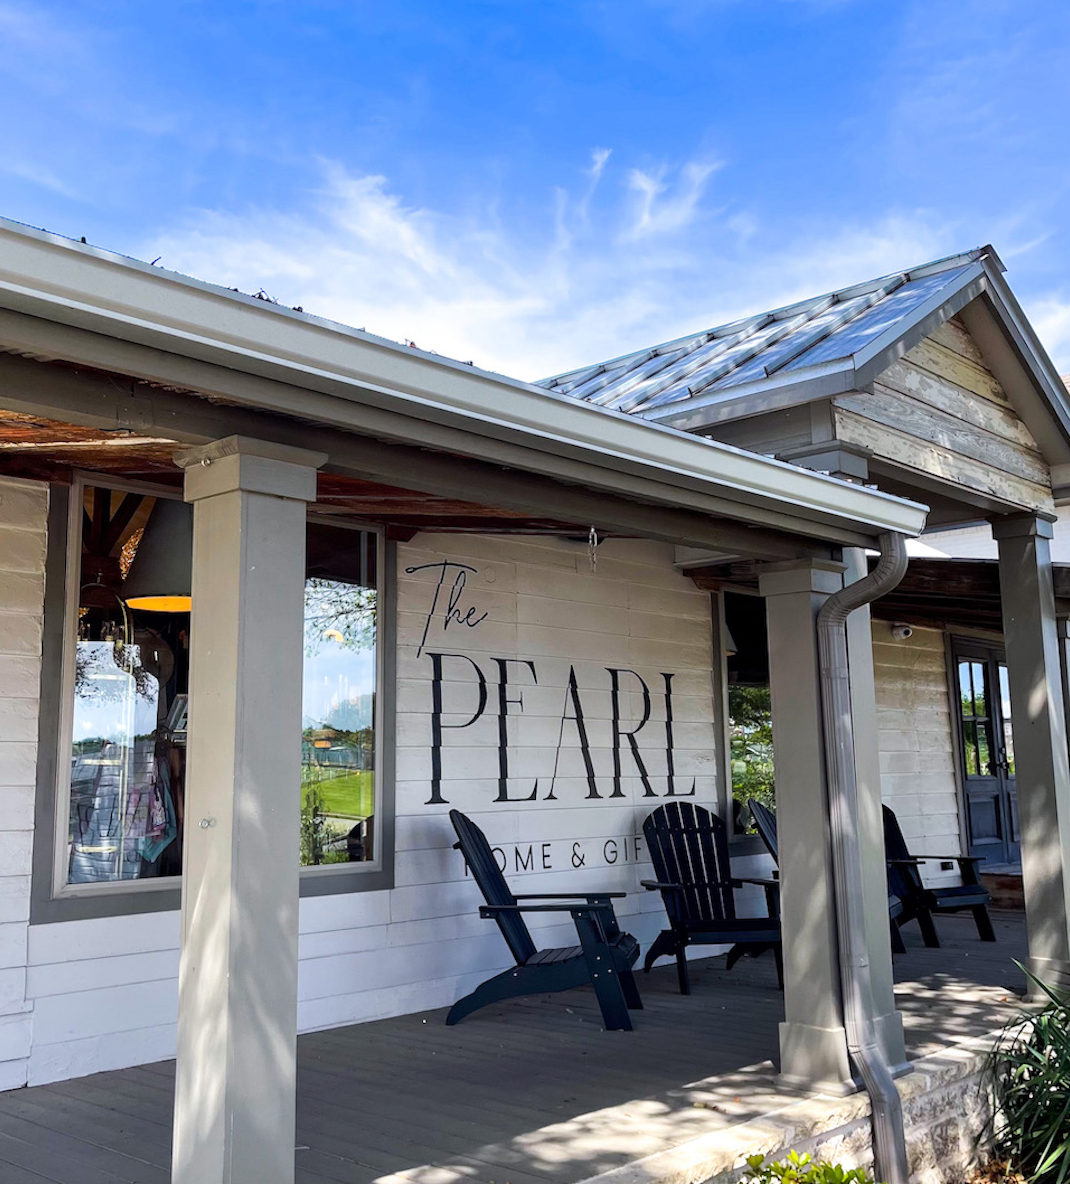 The Pearl Boutique in Granbury, Texas